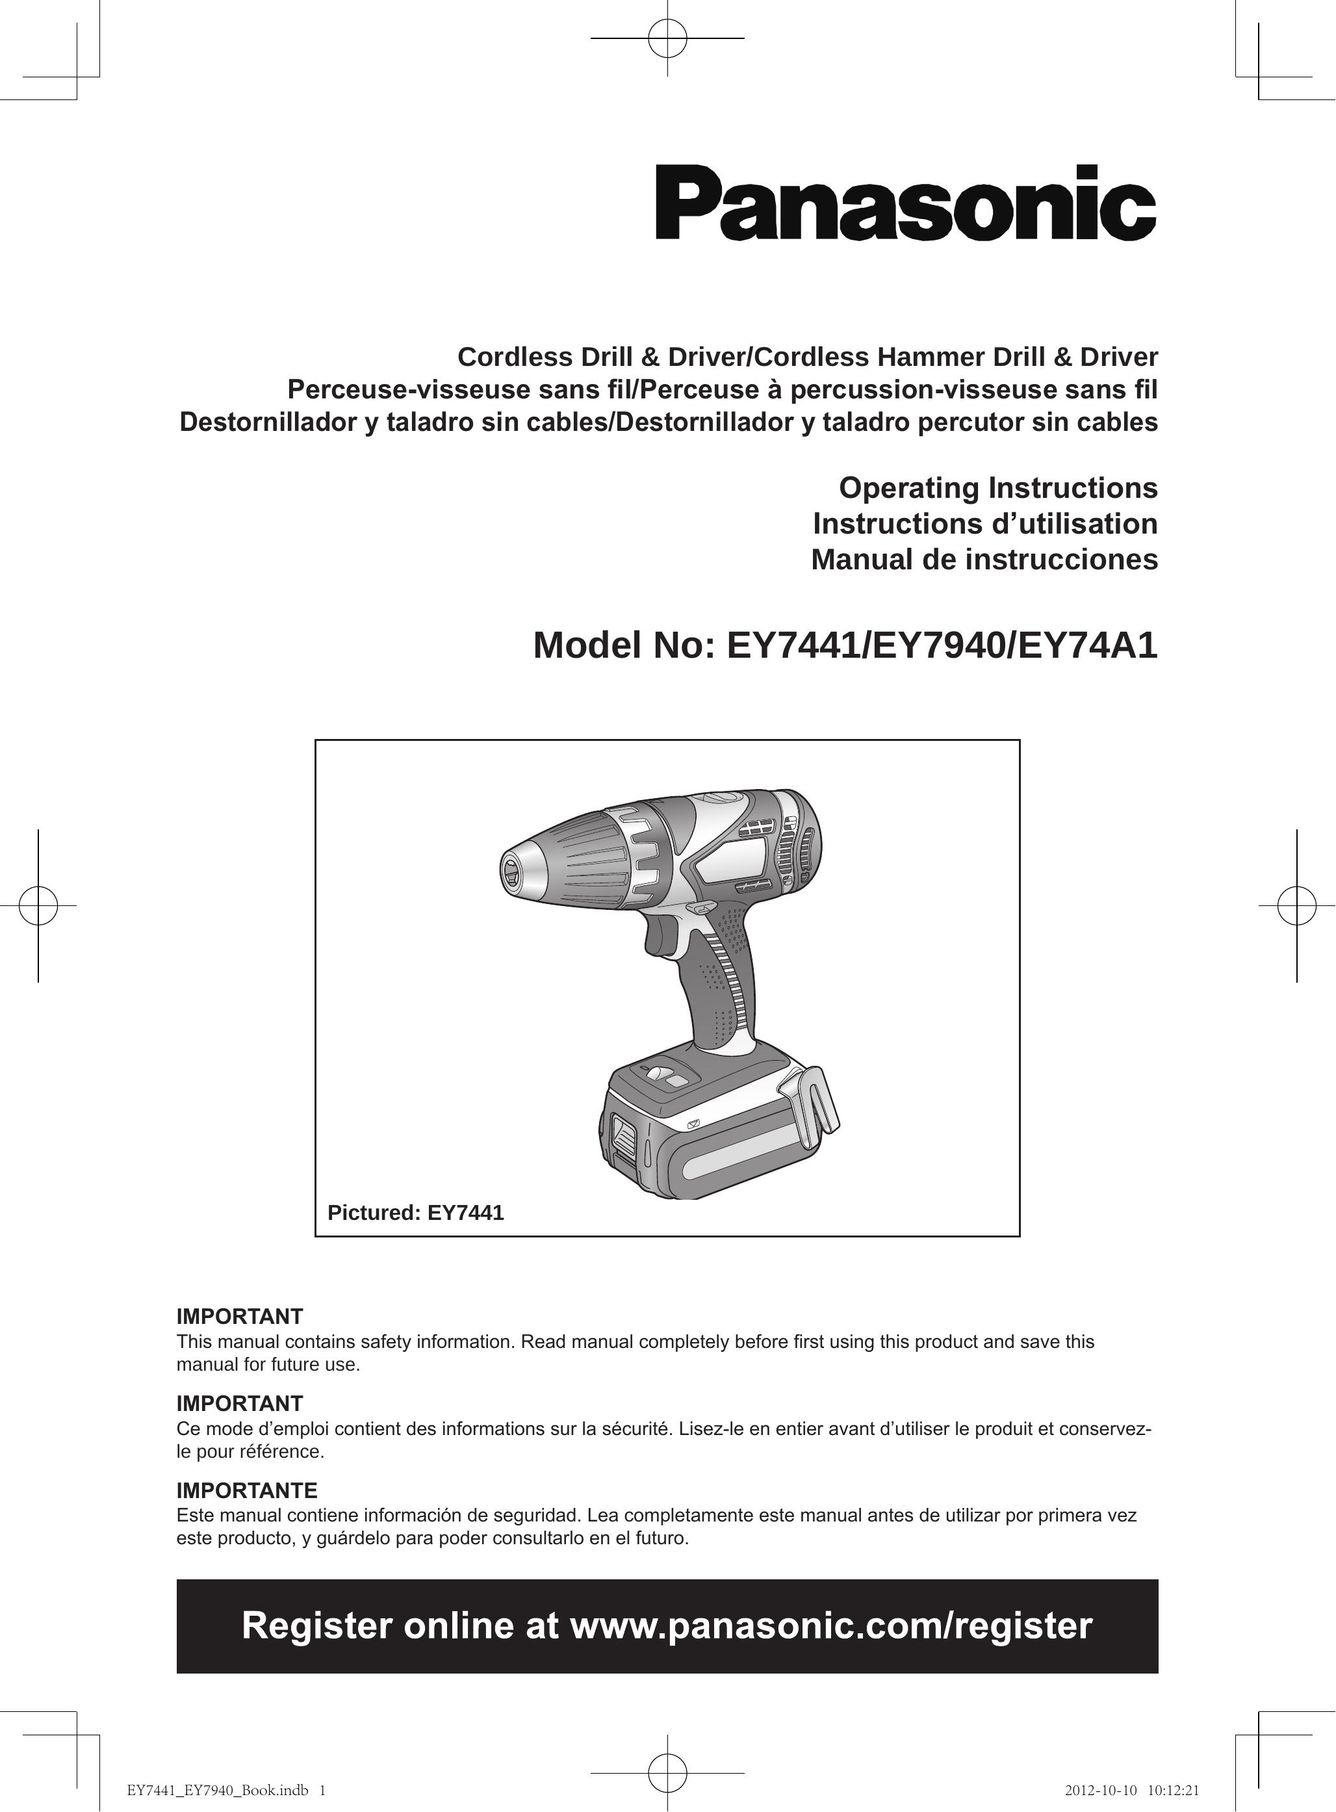 Panasonic EY7441 Cordless Drill User Manual